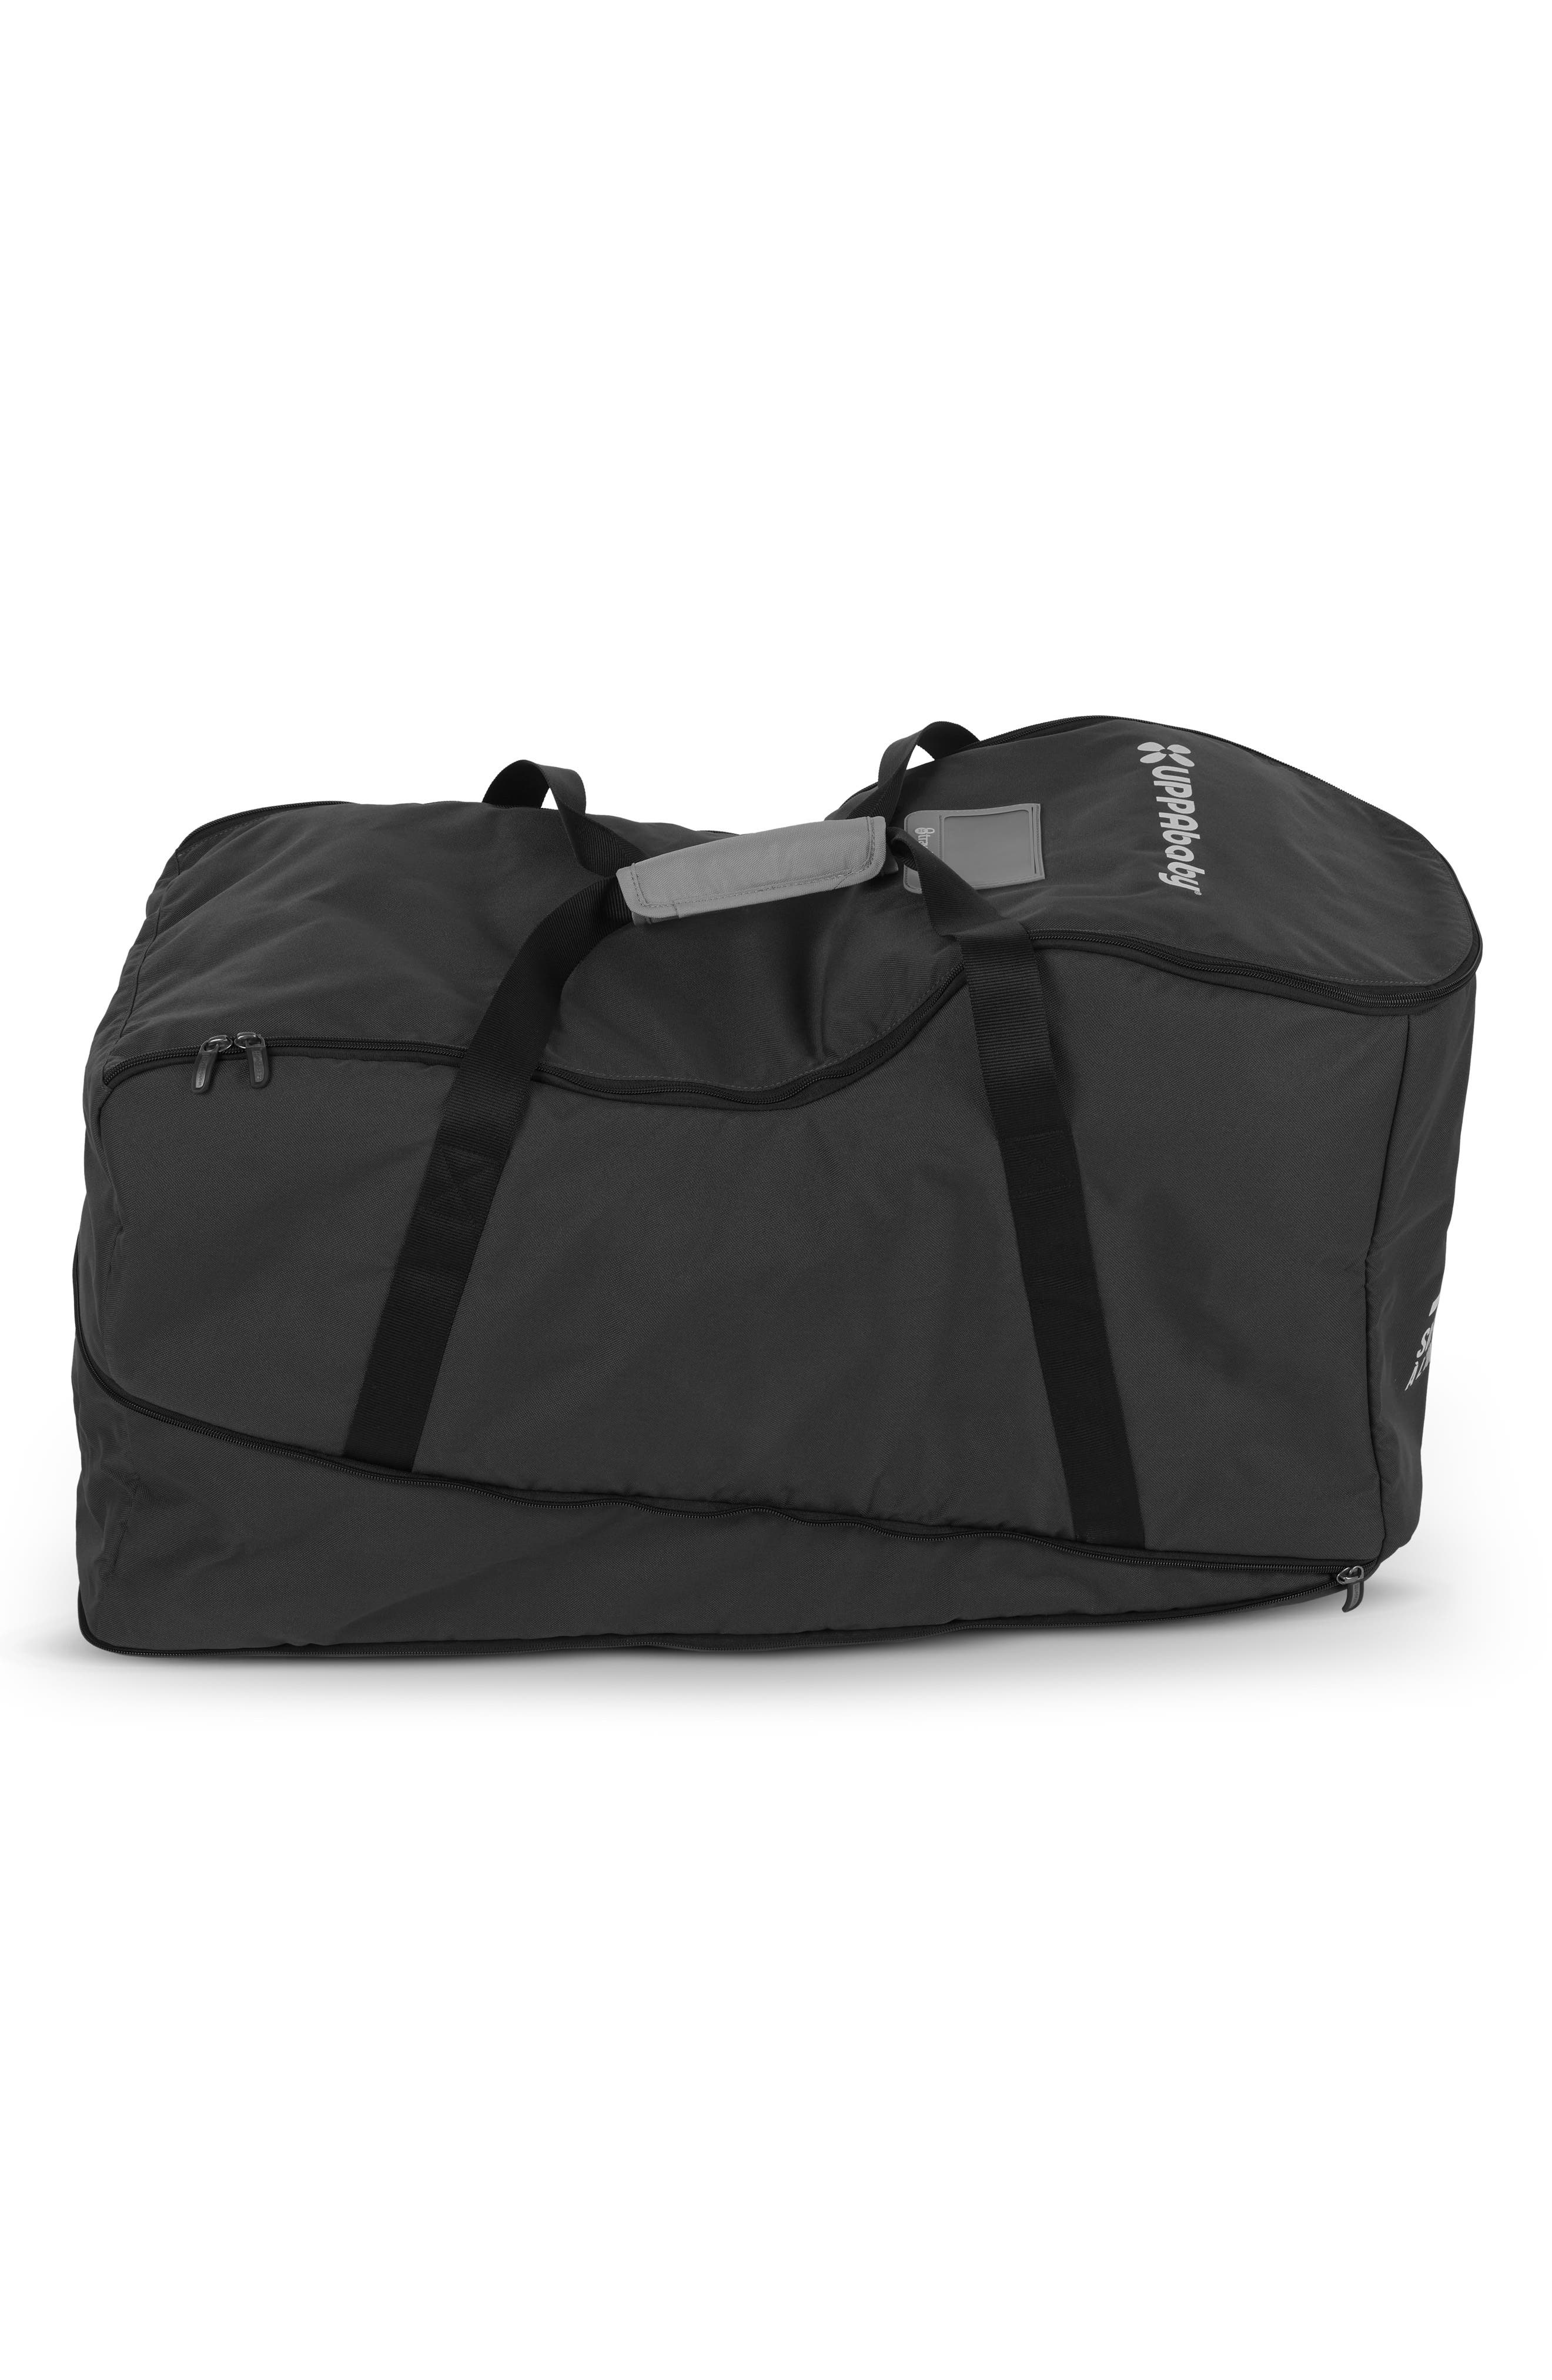 Uppababy Vista Stroller Travel Bag Brand New In Box 